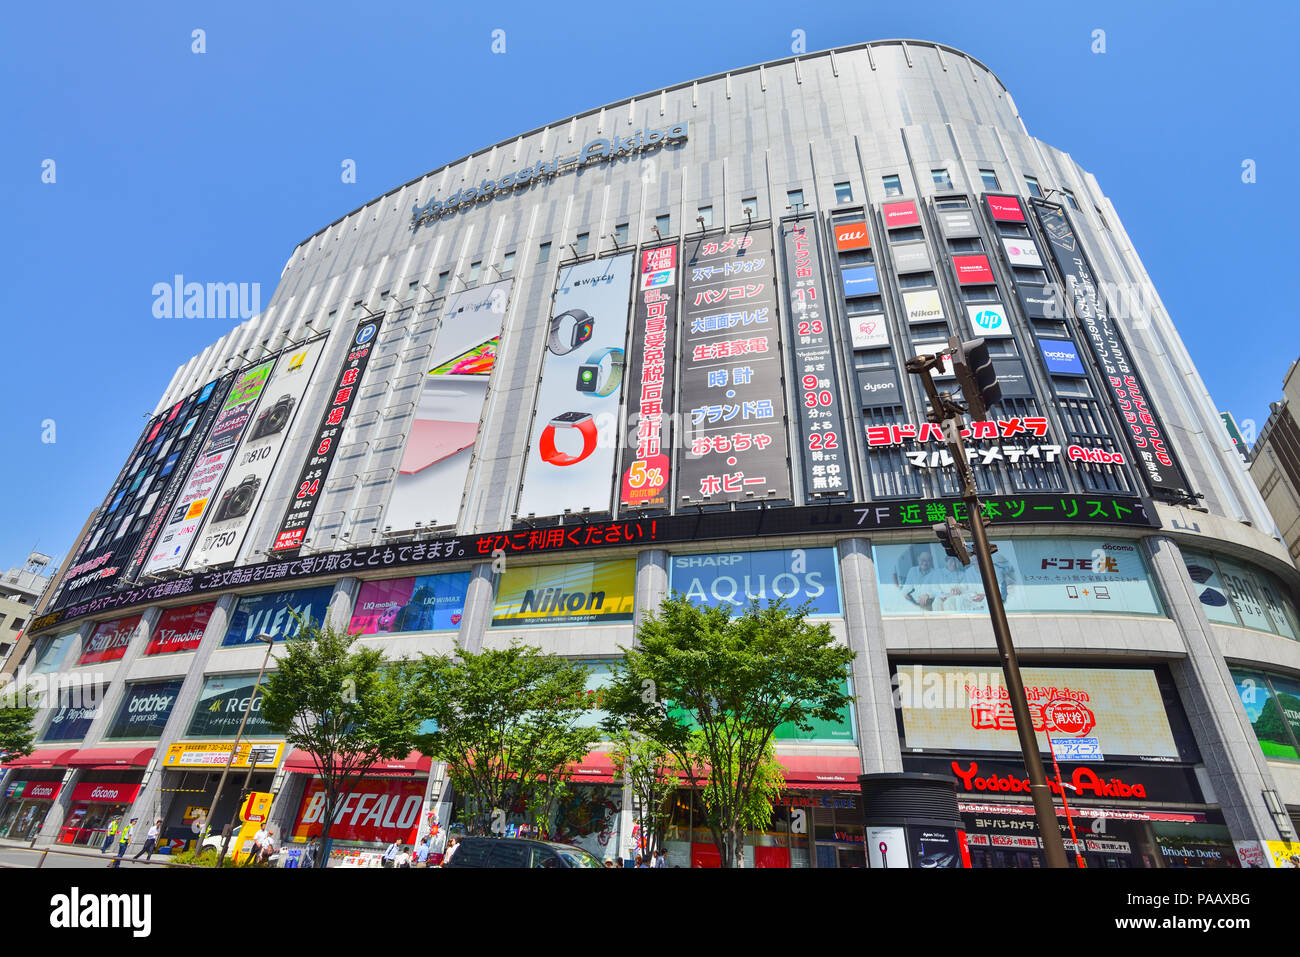 Yodobashi Akihabara, also known as Yodobashi Akiba. This iconic shopping mall is full of electronics goodies for geeks and otakus. Stock Photo